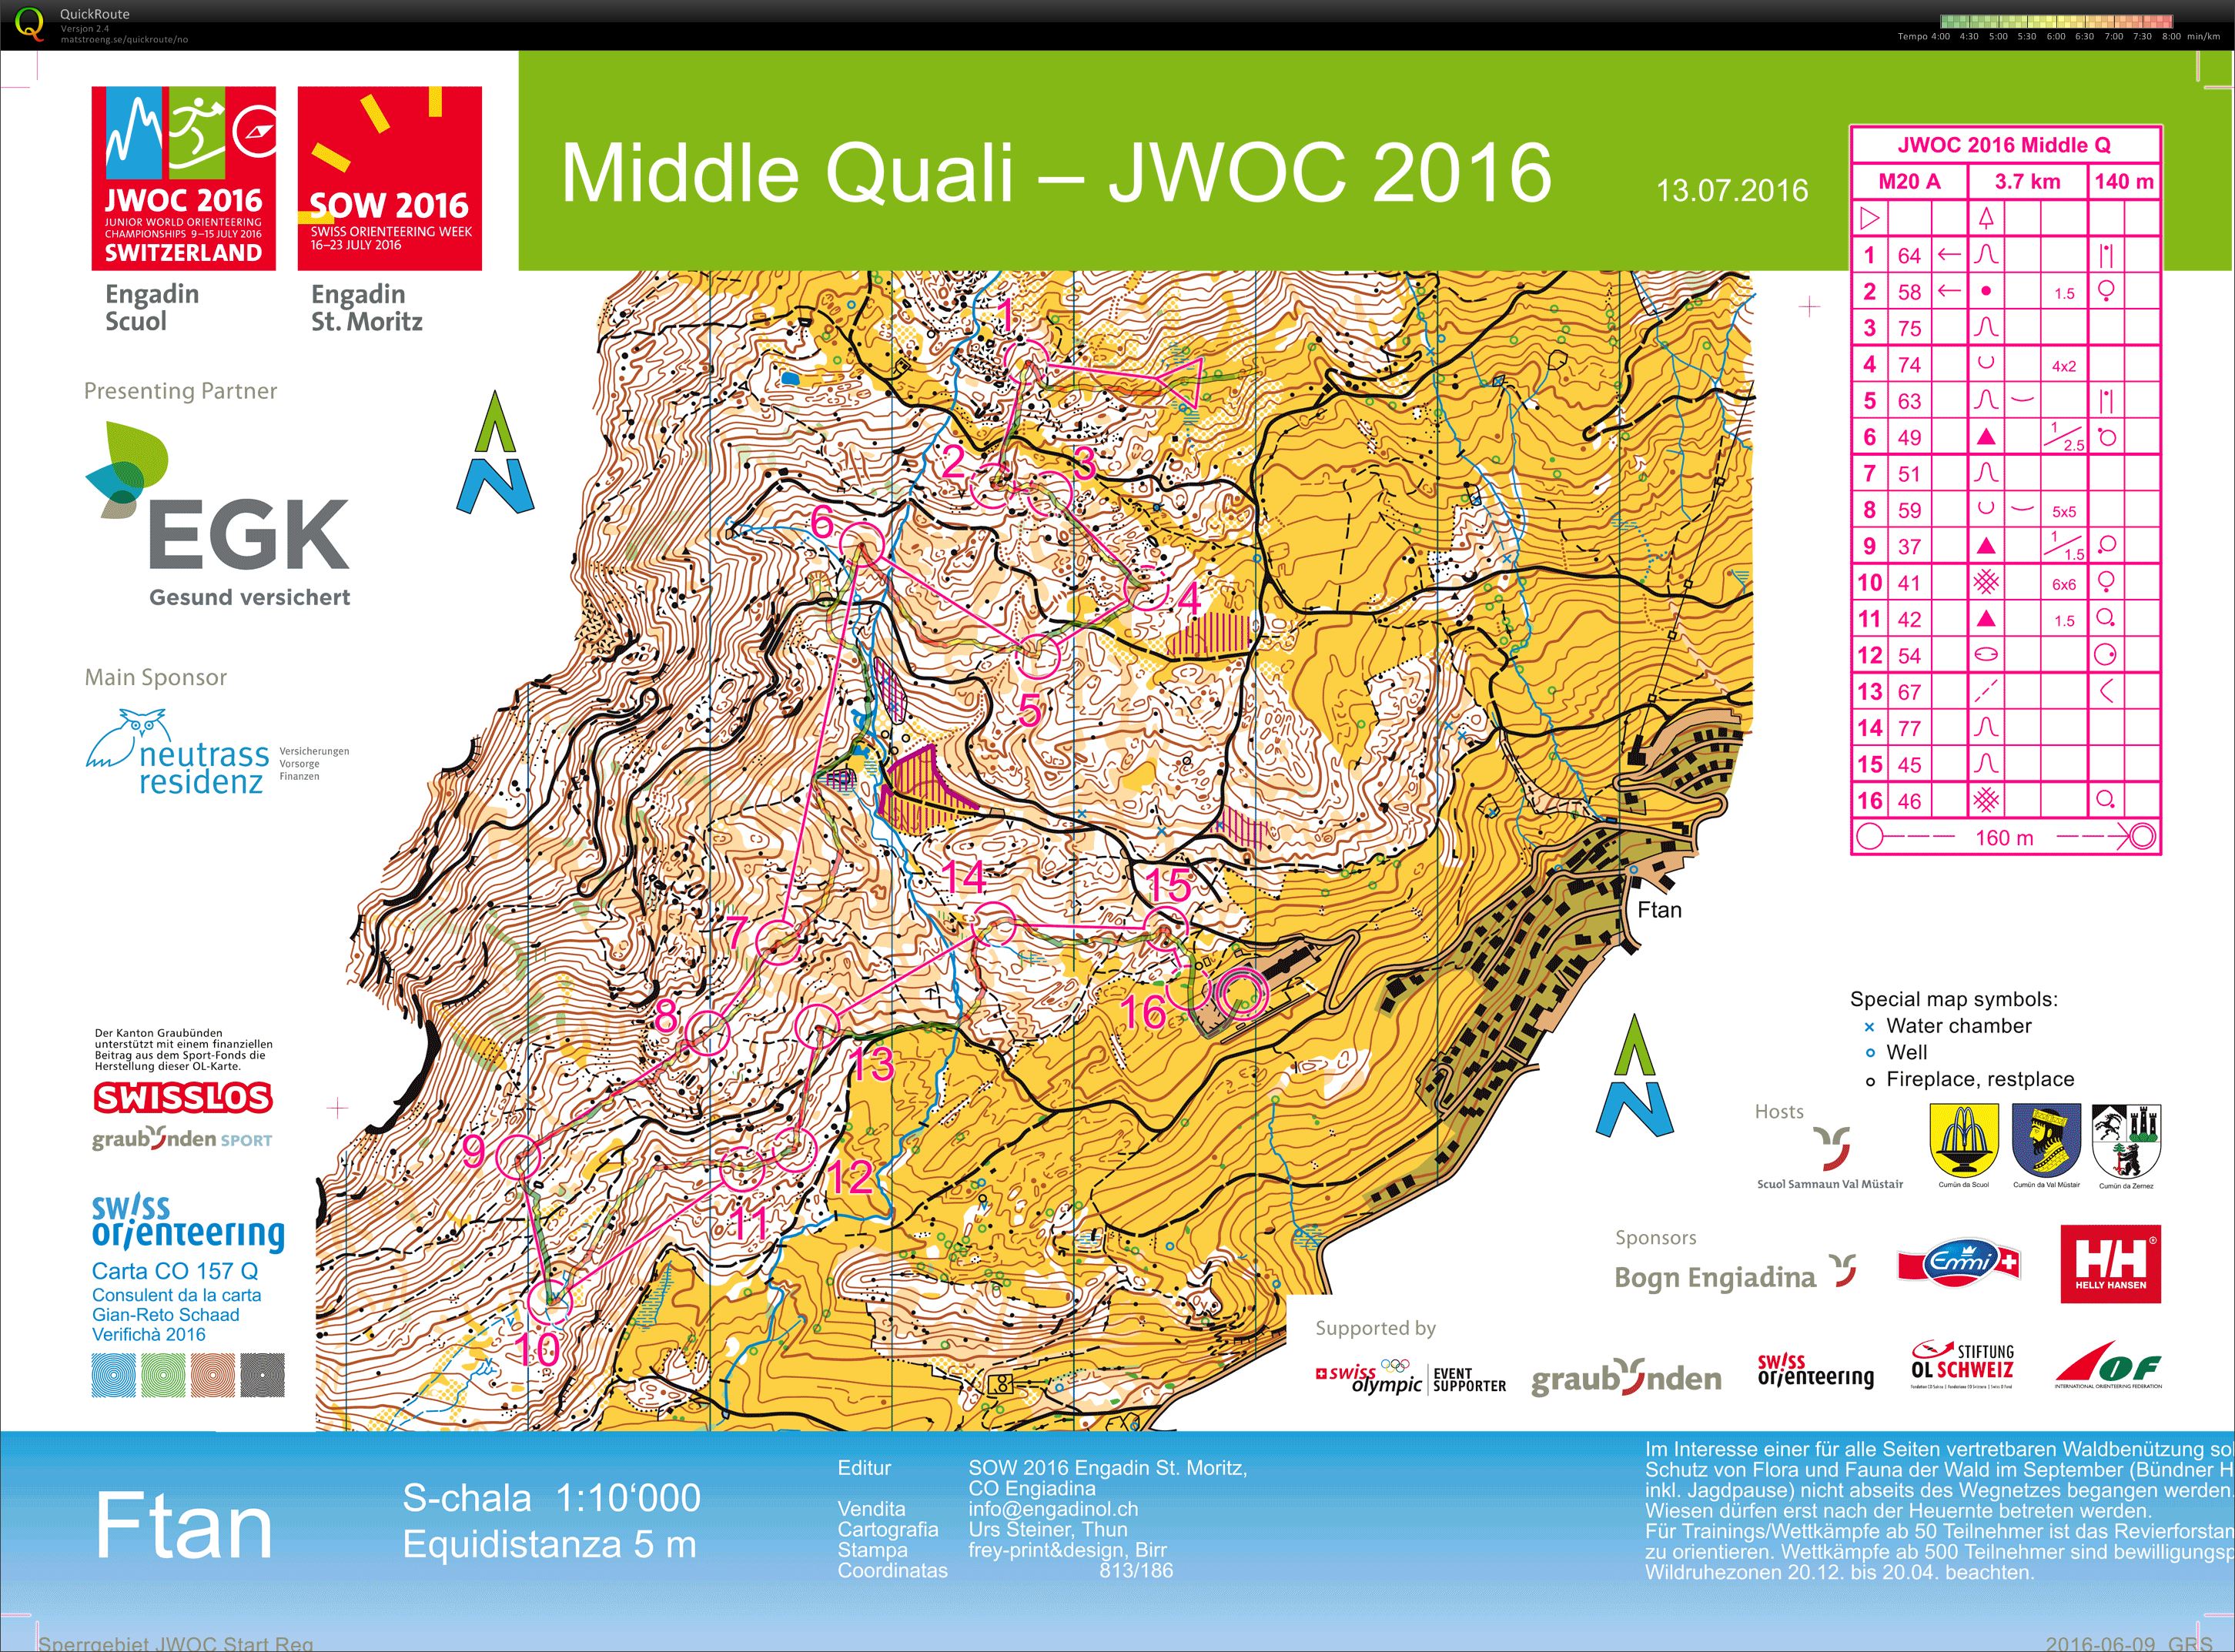 JWOC Middle Qualification (13-07-2016)